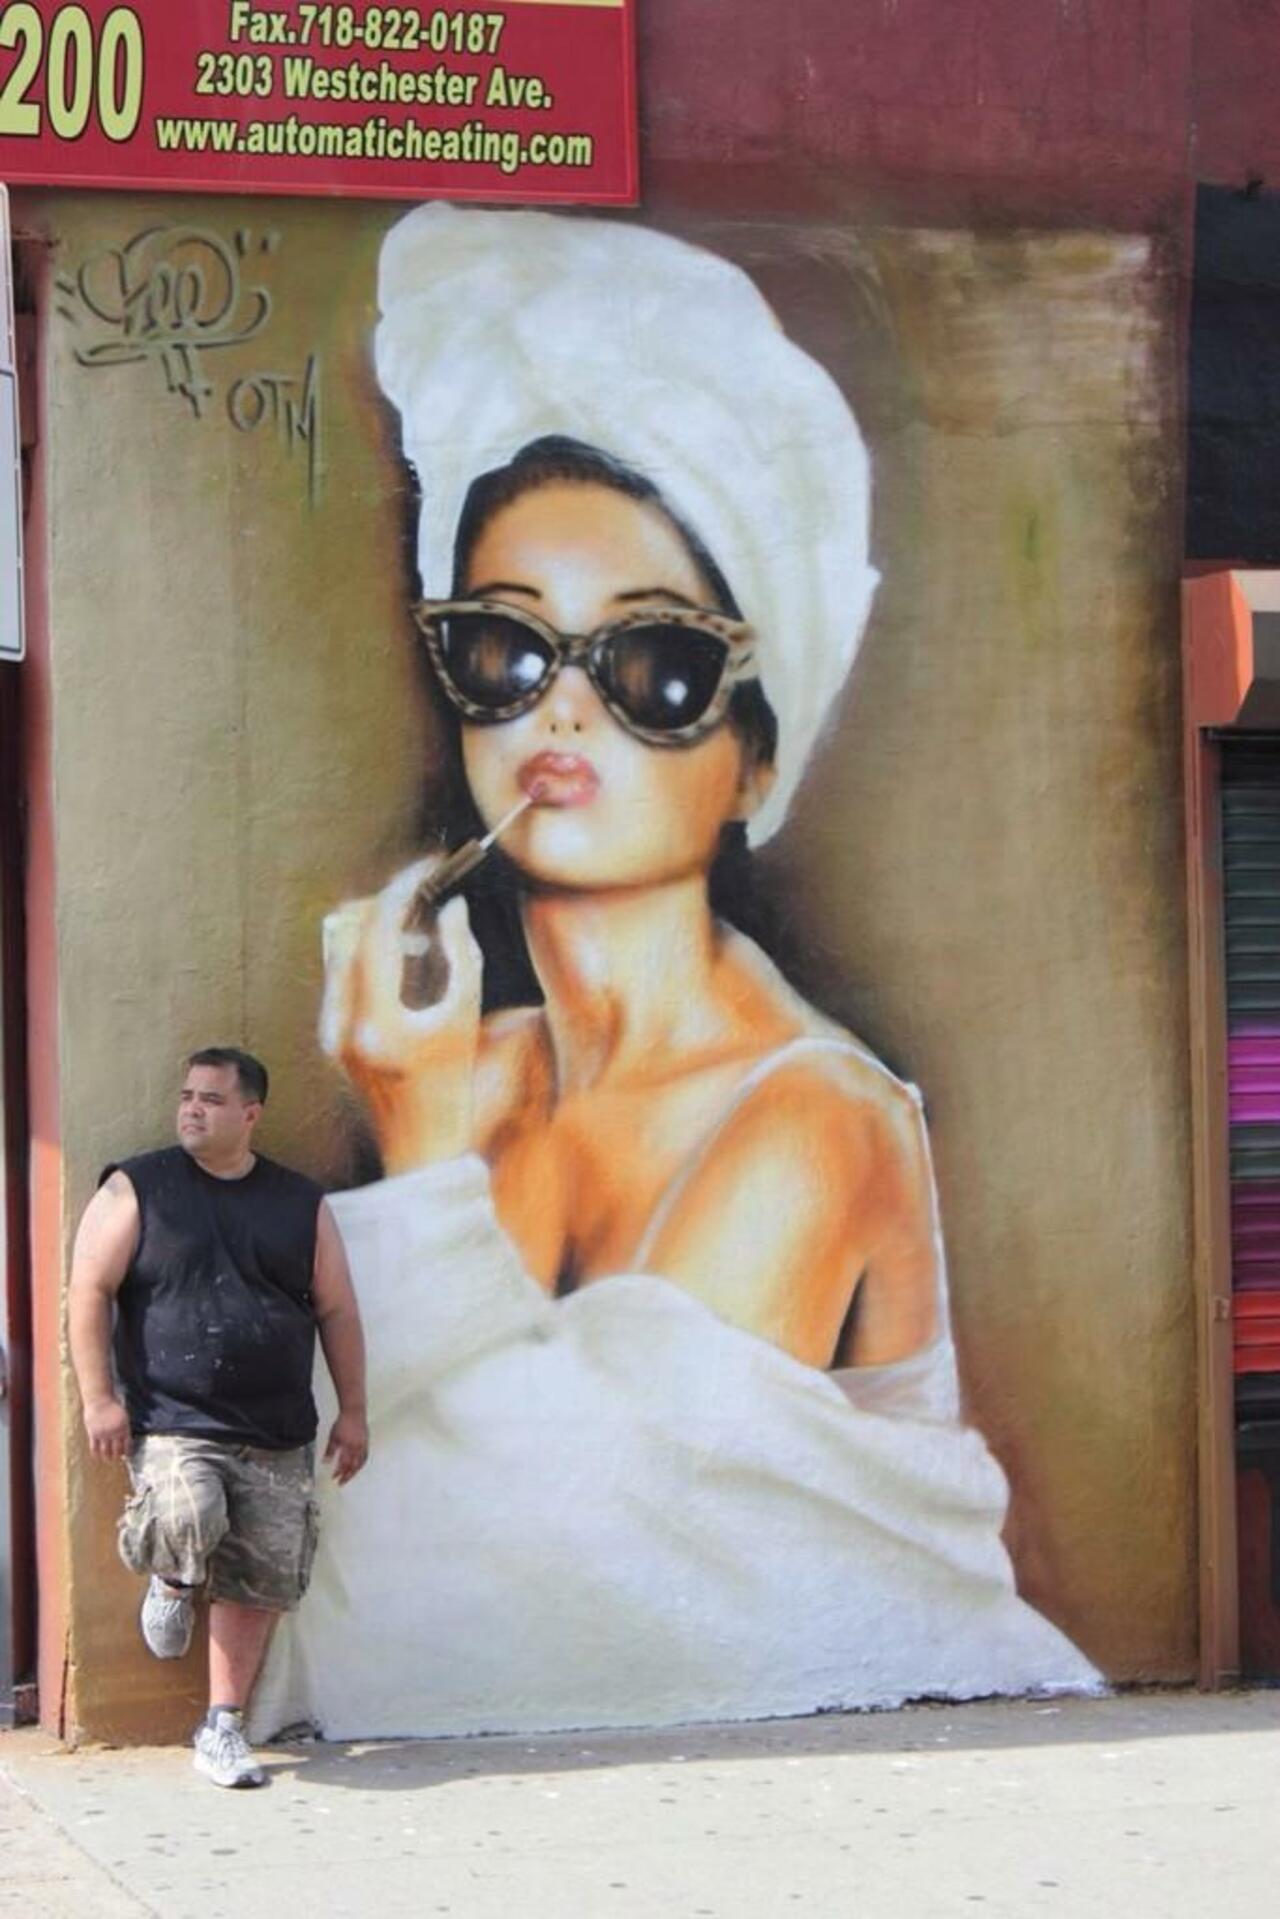 Artist 'see_tf' new Street Art portrait located in The Bronx, #NY #art #graffiti #mural #streetart http://t.co/kmGy8c3HyJ